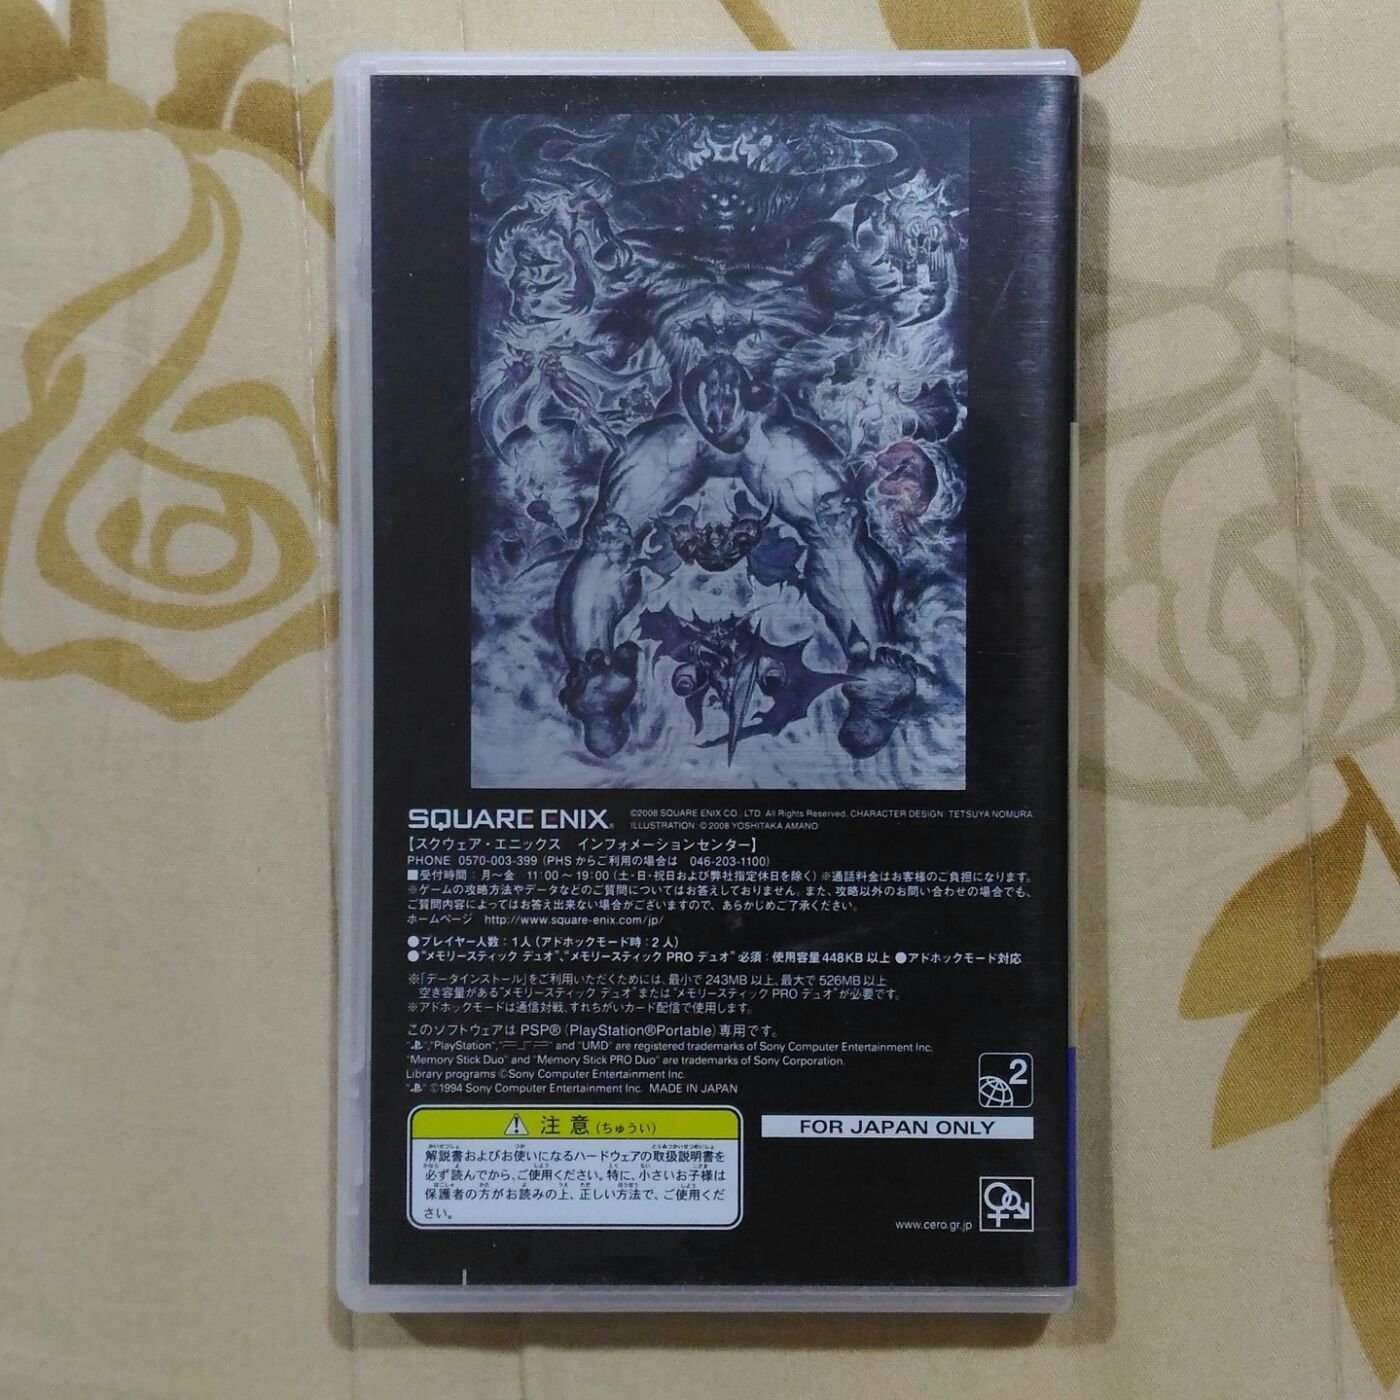 PSP 太空戰士紛爭Dissidia 012 限定版式樣封面最終幻想純日版(編號8